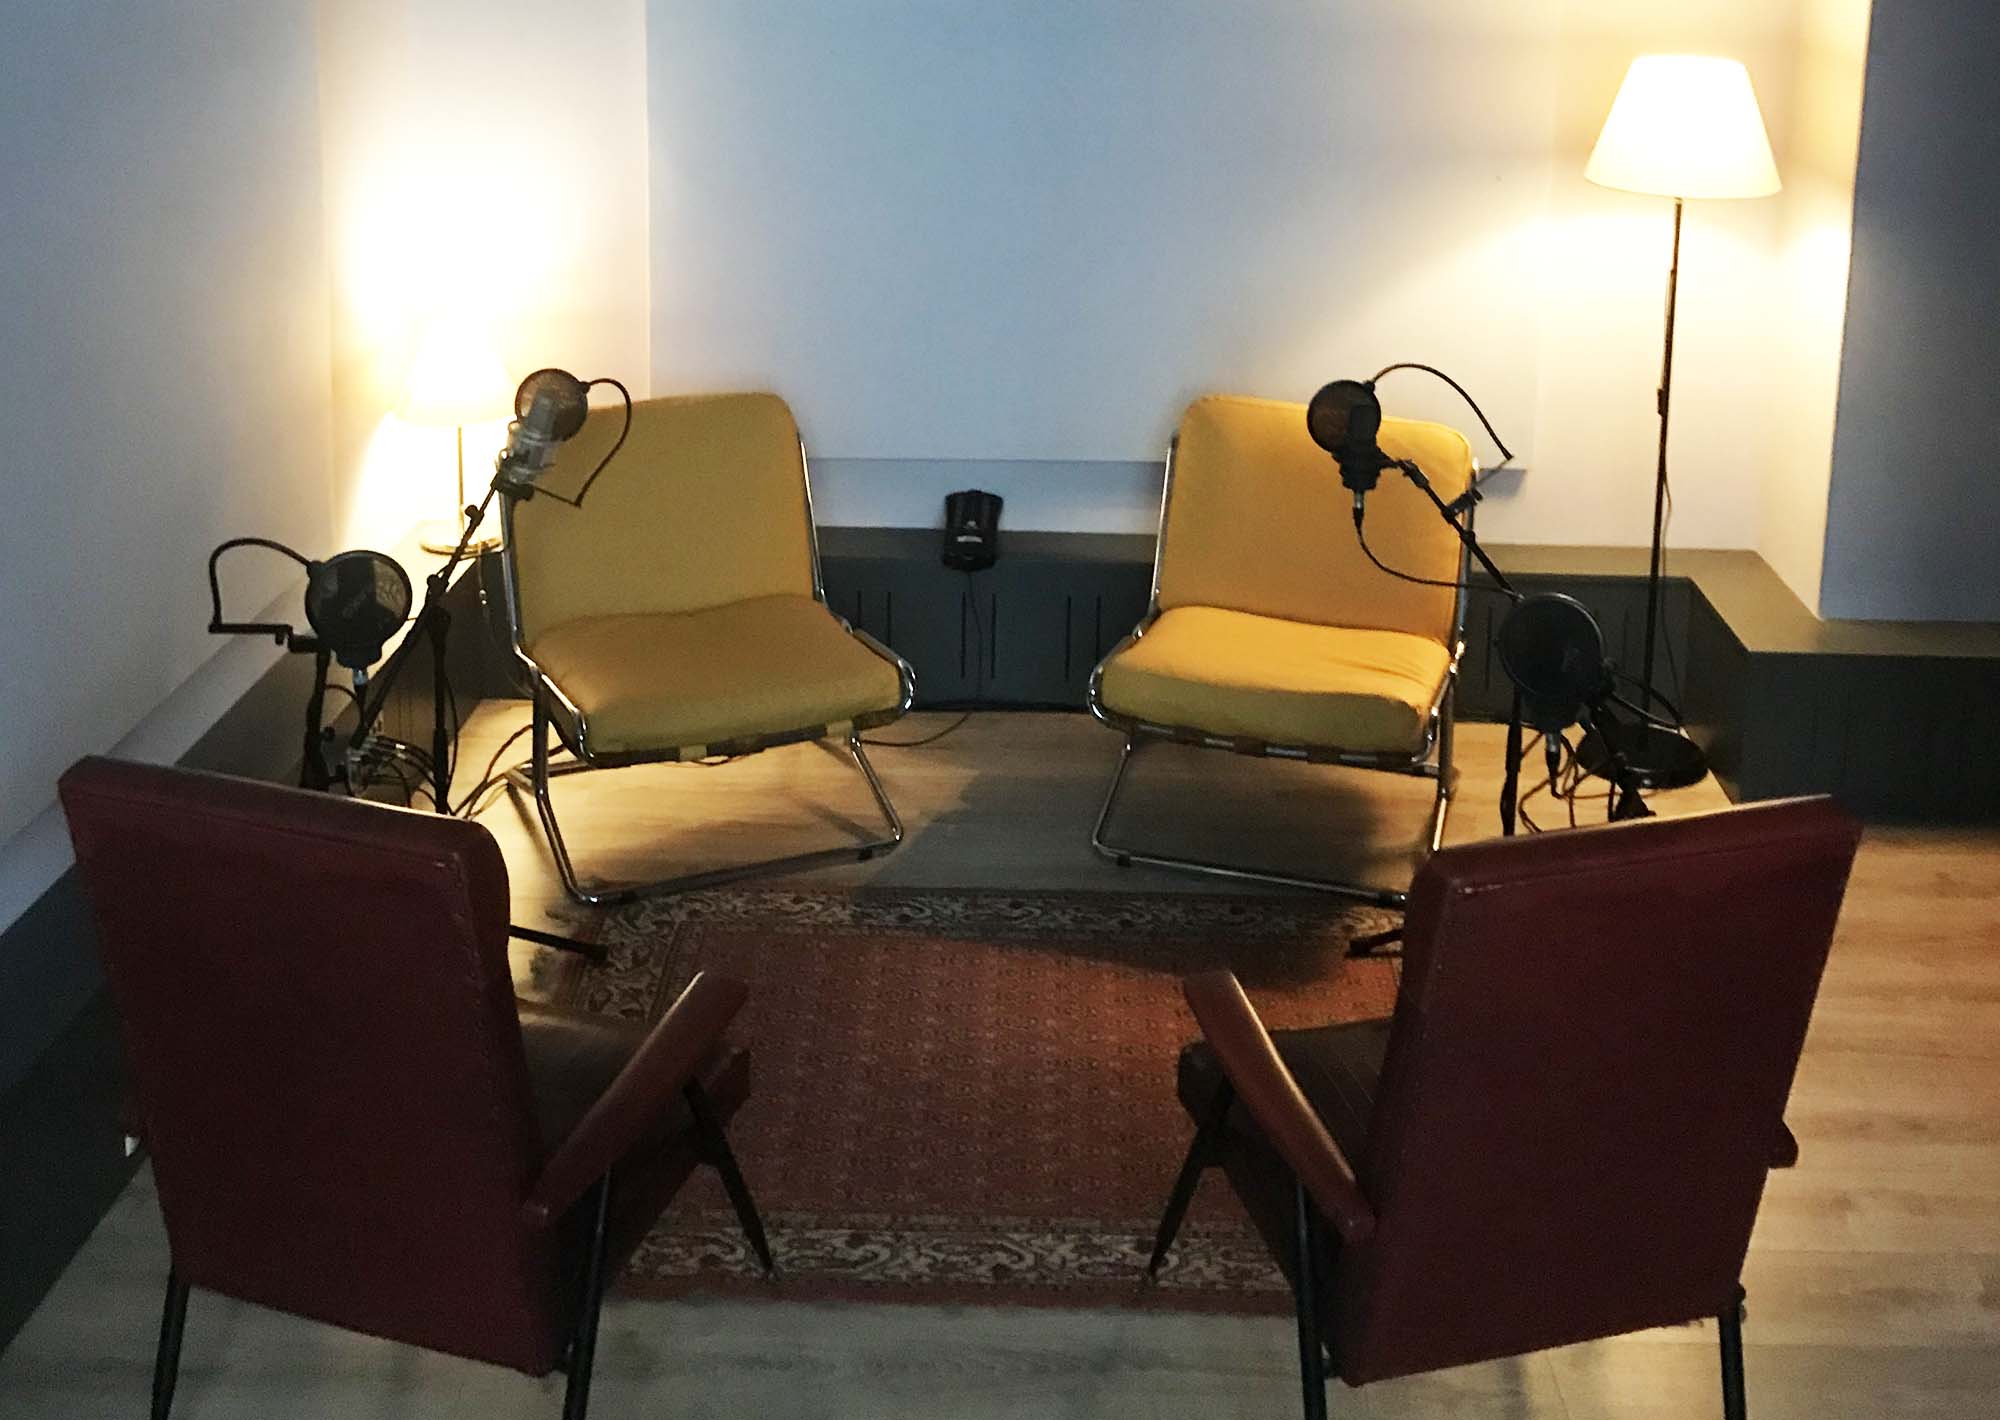 Podcast Indiebub